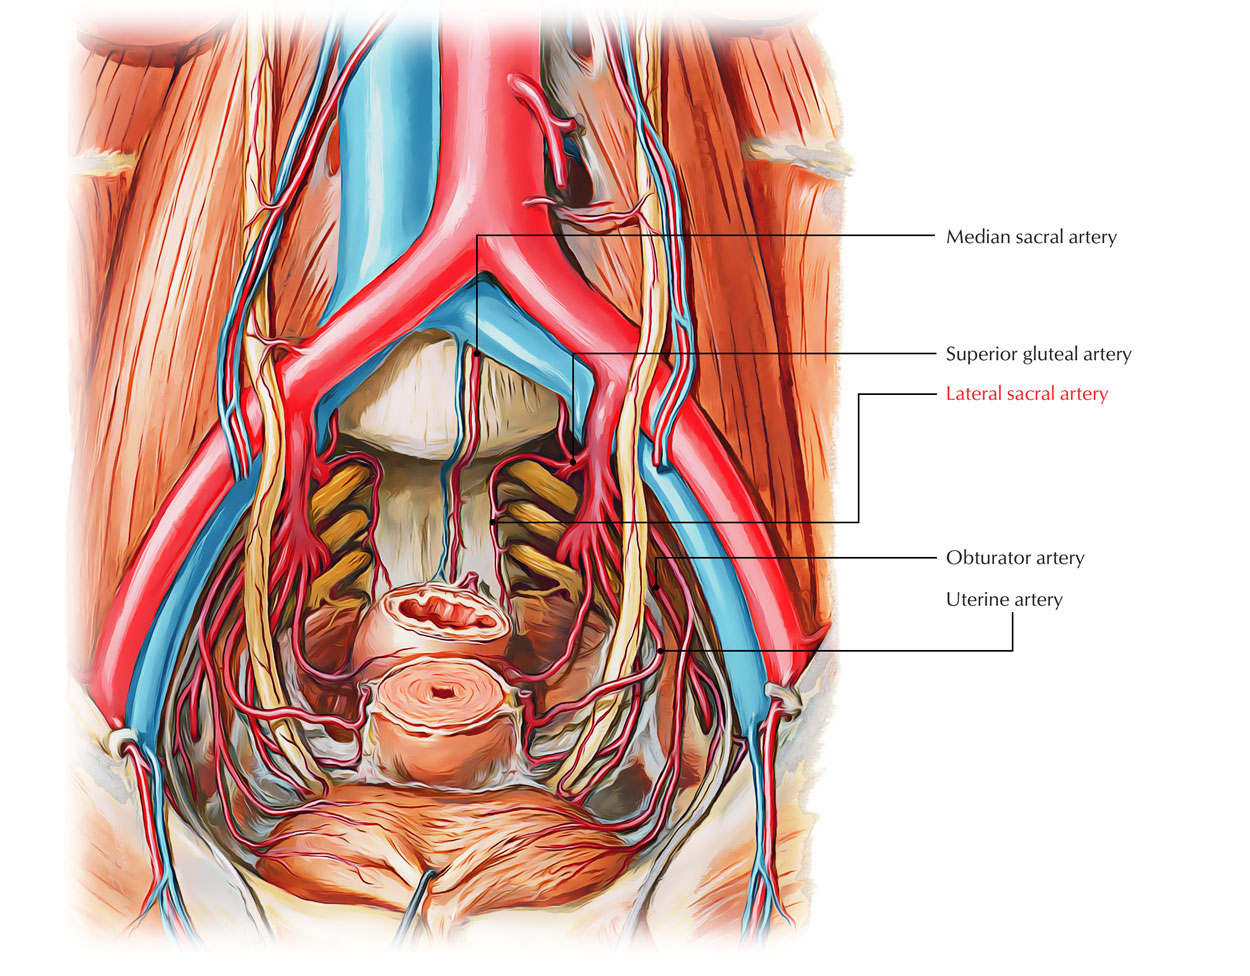 Lateral Sacral Artery